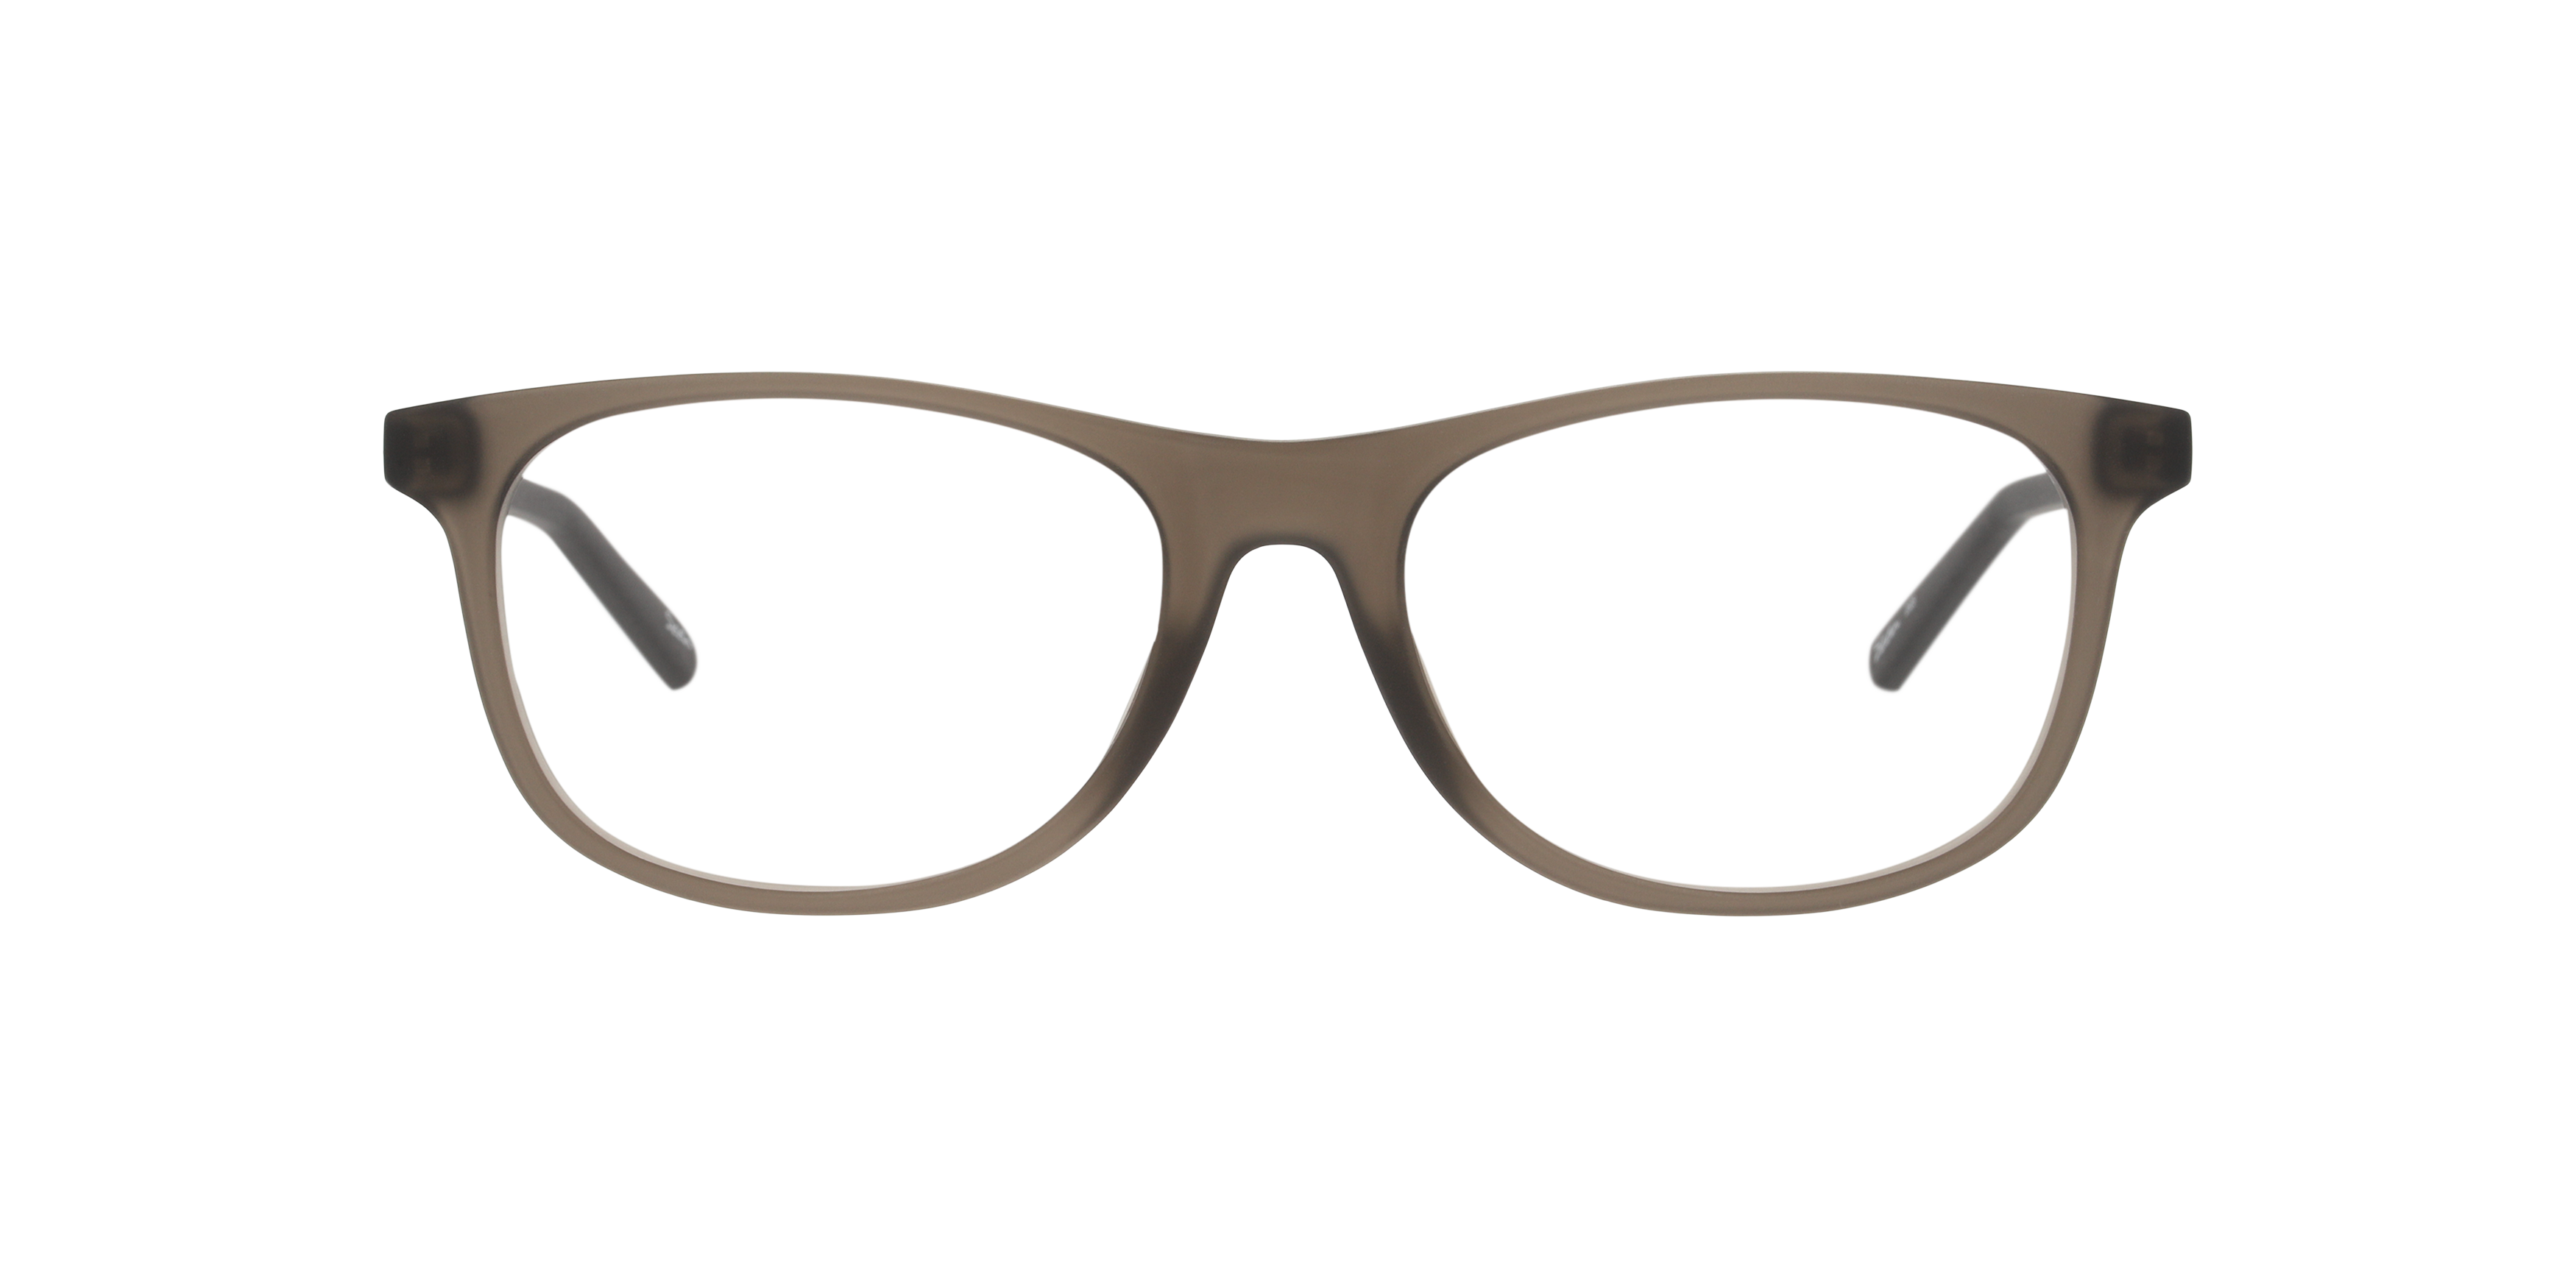 Front Seen NE3062 Glasses Transparent / Transparent, Grey